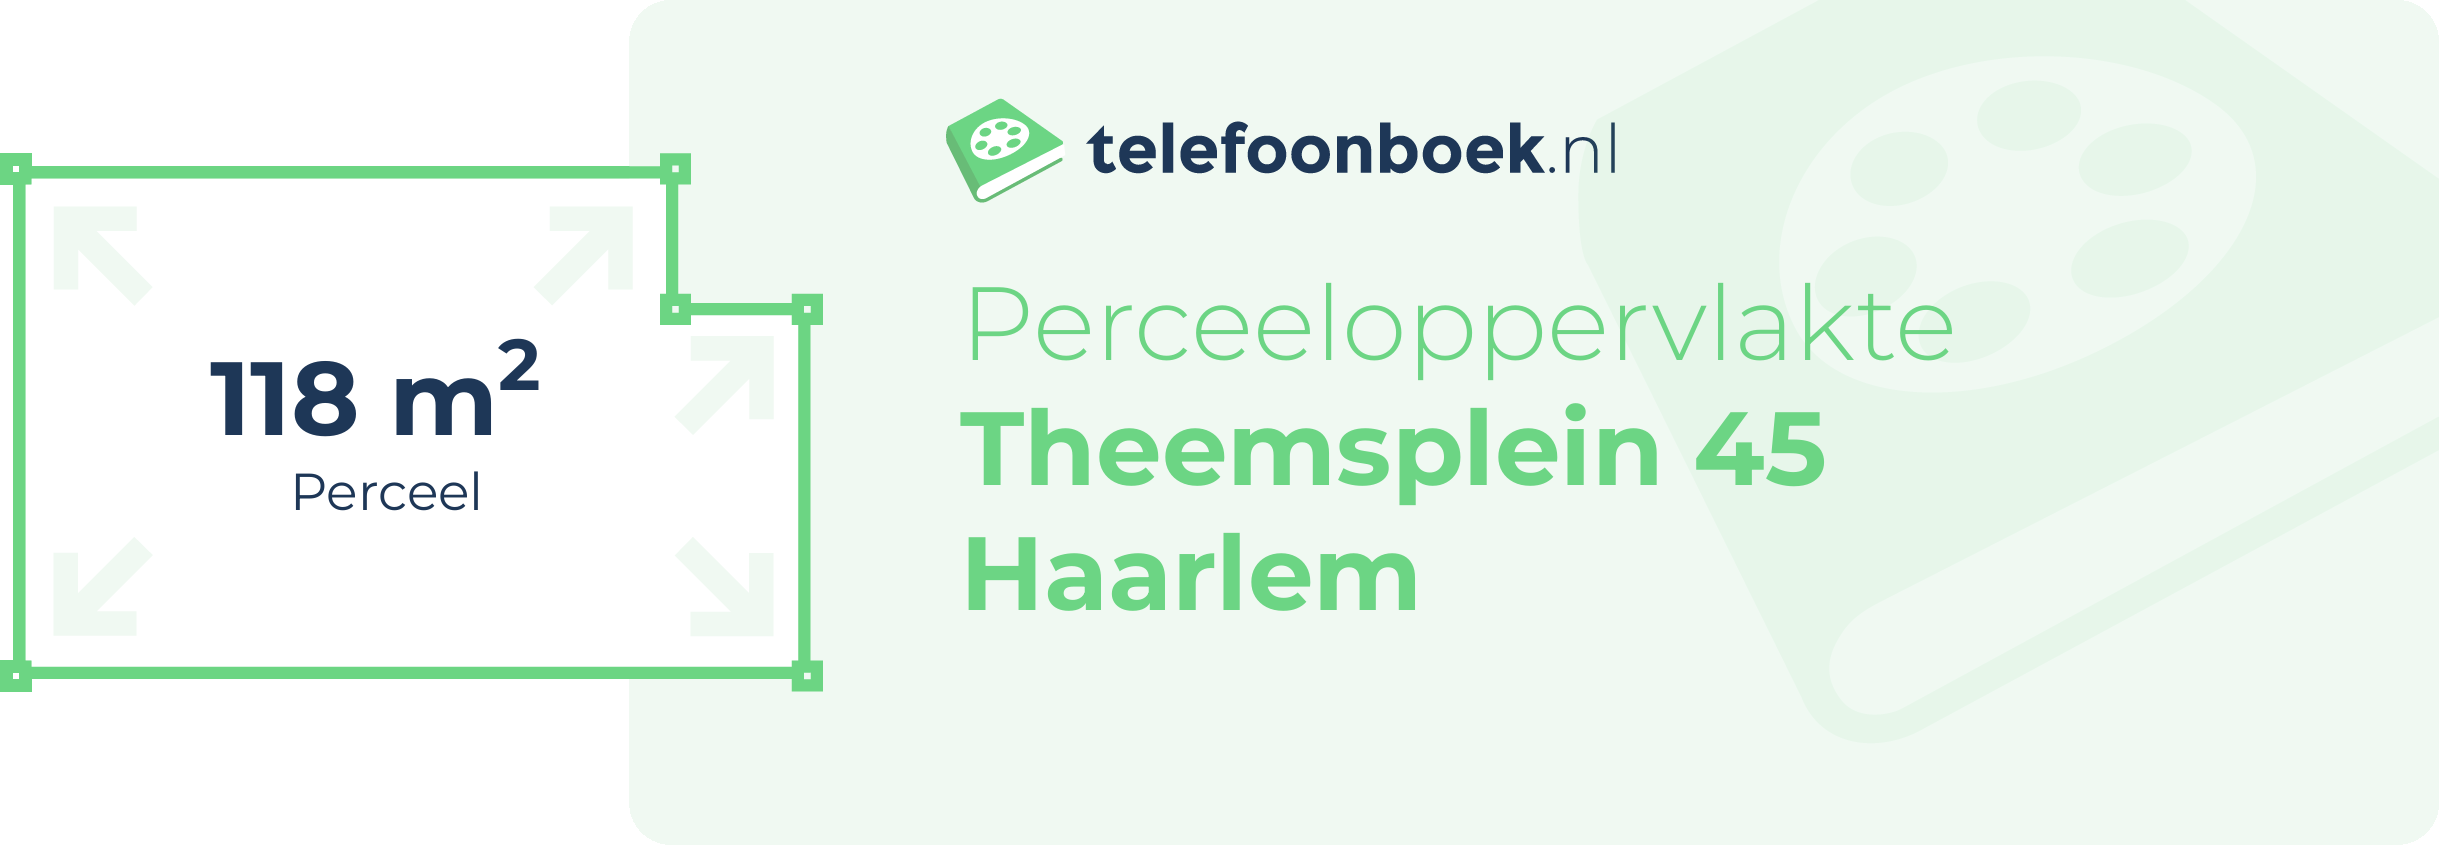 Perceeloppervlakte Theemsplein 45 Haarlem